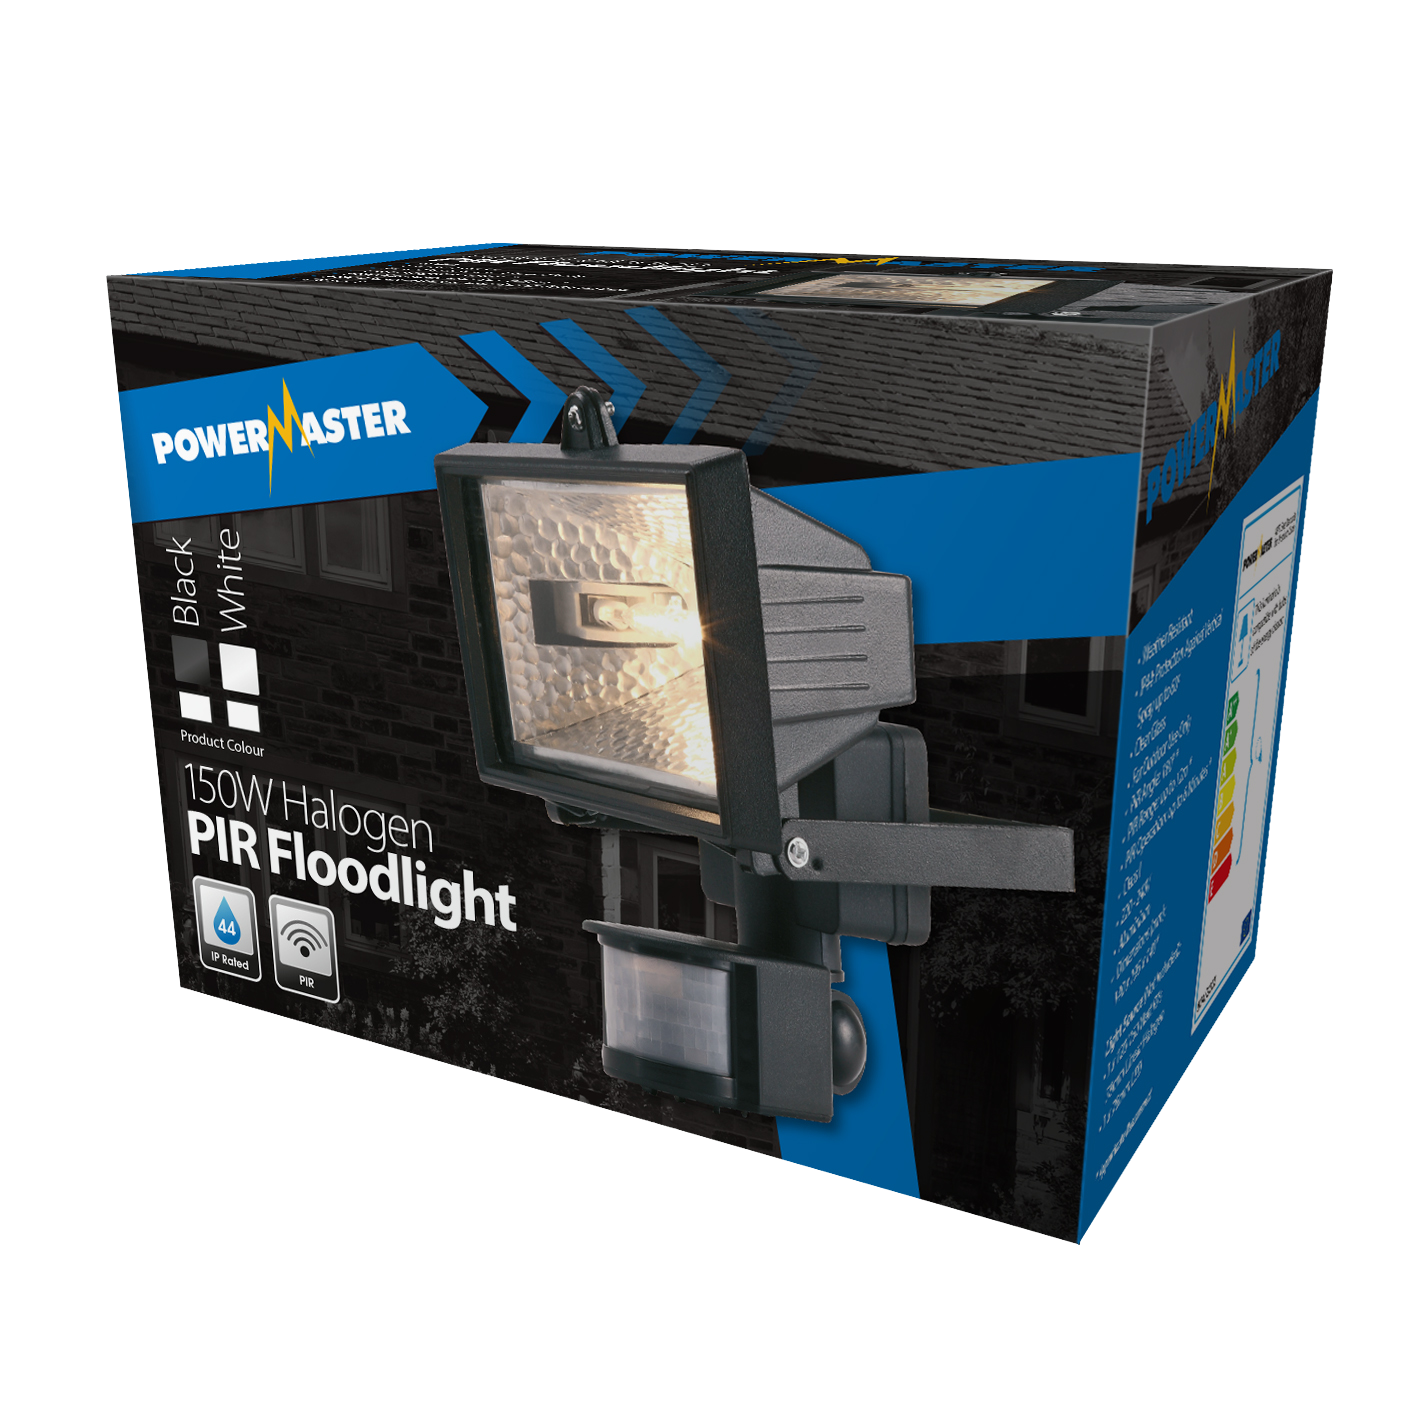 PowerMaster 150W Eco Halogen PIR Floodlight - Black - Lamp Not Included